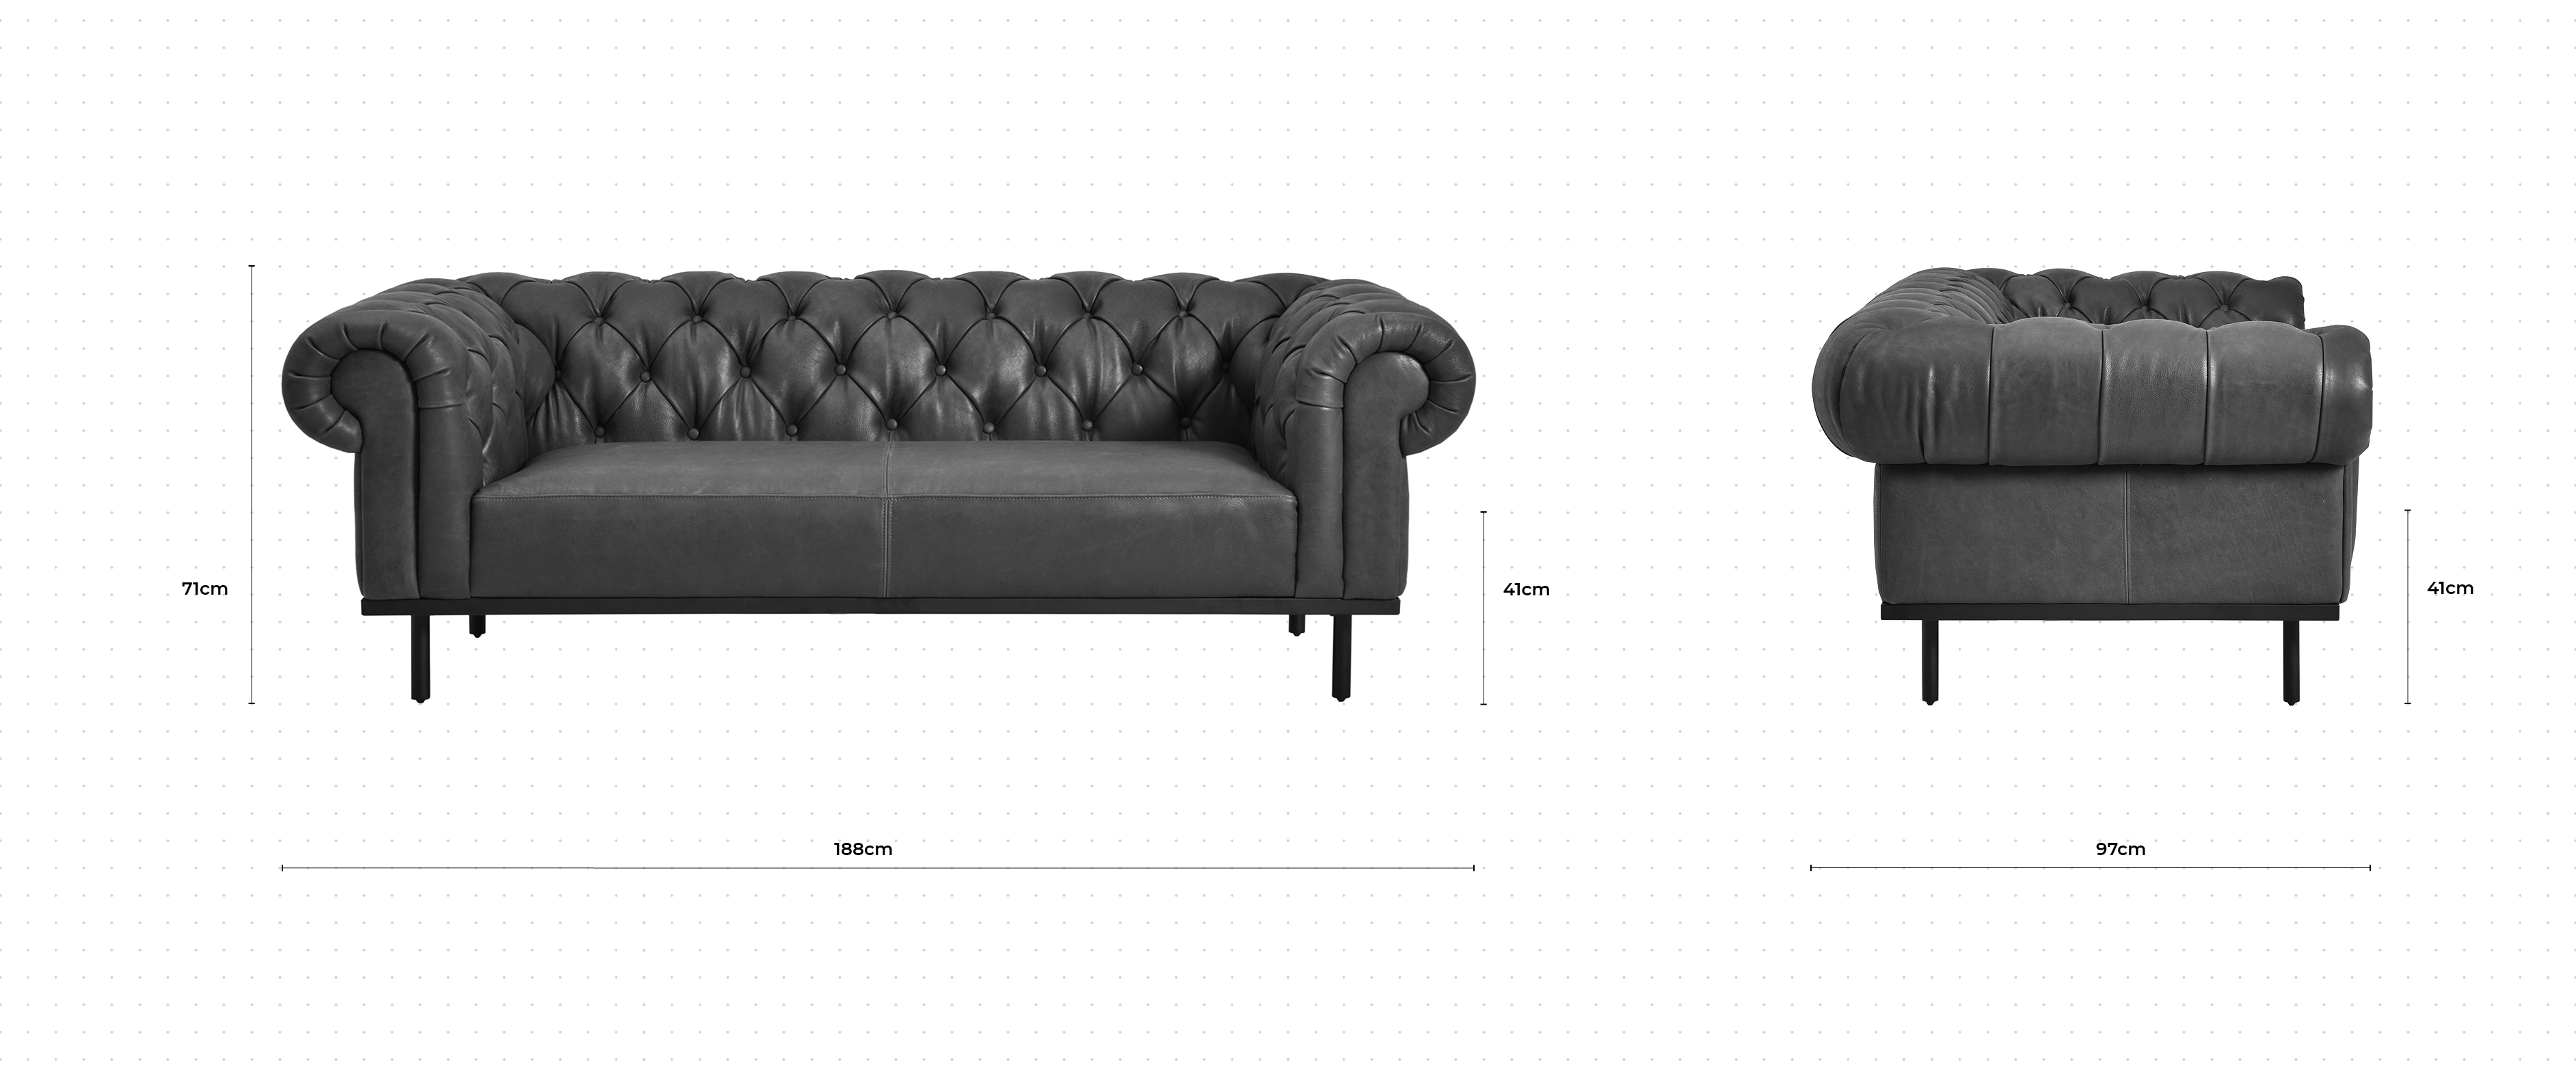 Parfait 2 Seater Sofa dimensions